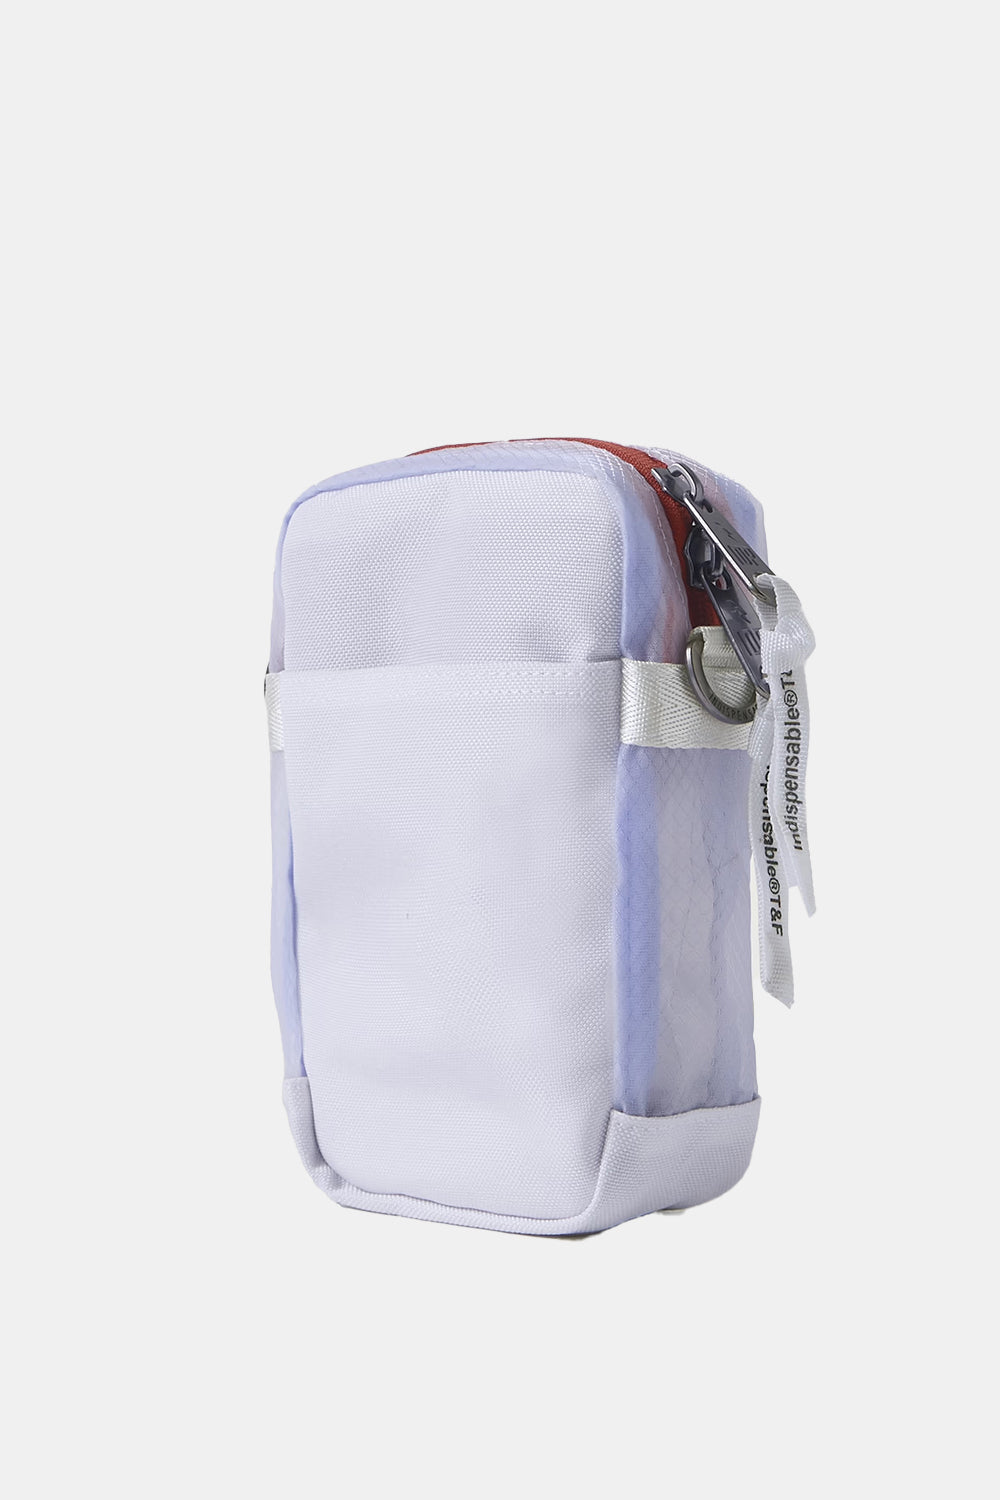 Indispensable IDP Shoulder Bag Litt St - Clear